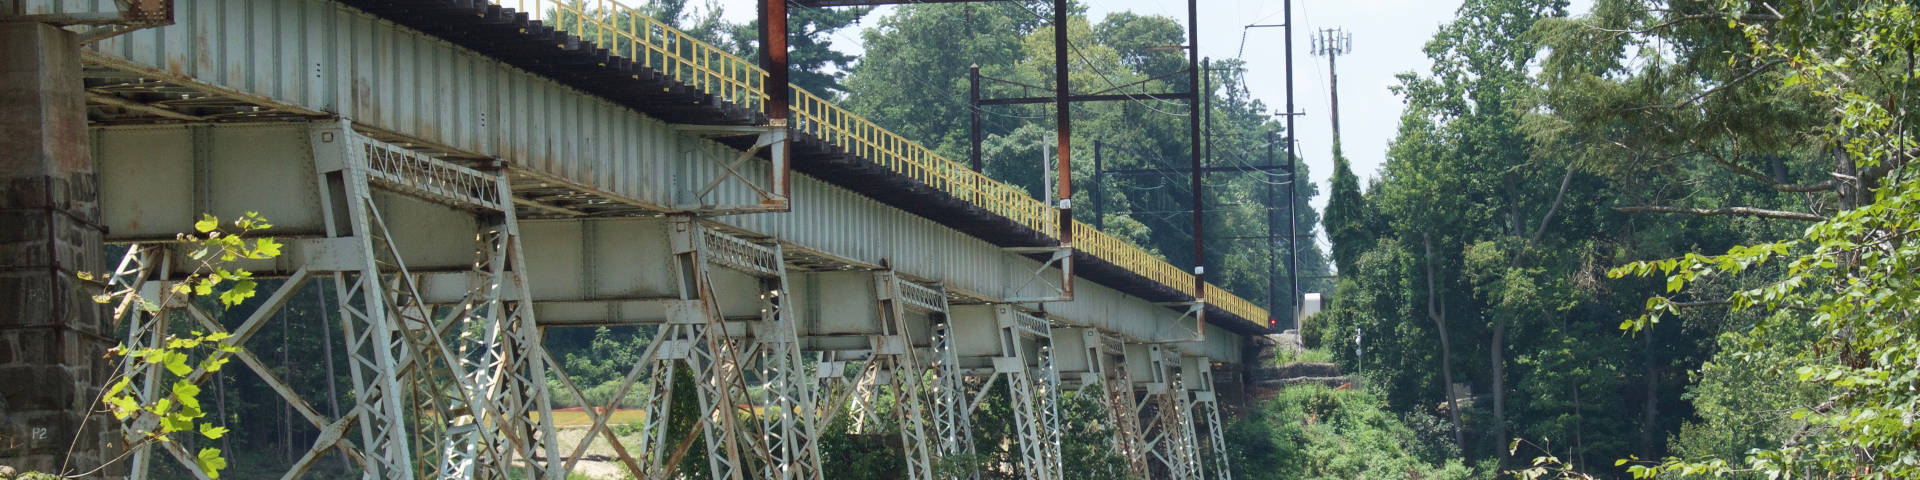 Train Bridge at Swarthmore College crossing Crum Creek